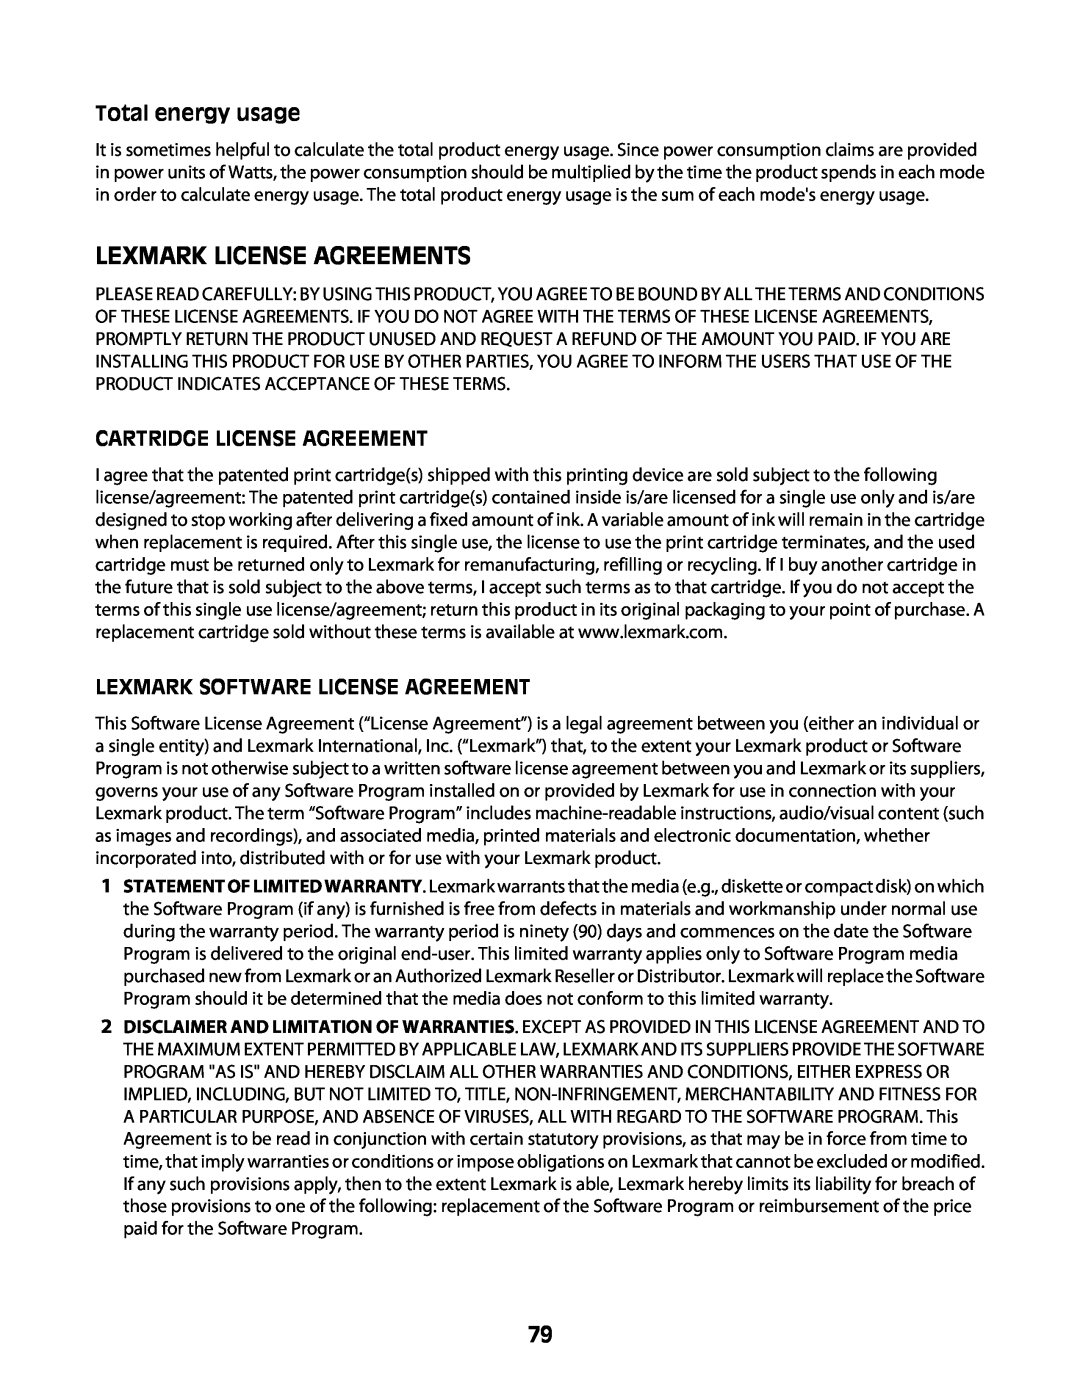 Lexmark Z2400 Series manual Lexmark License Agreements, Total energy usage, Cartridge License Agreement 